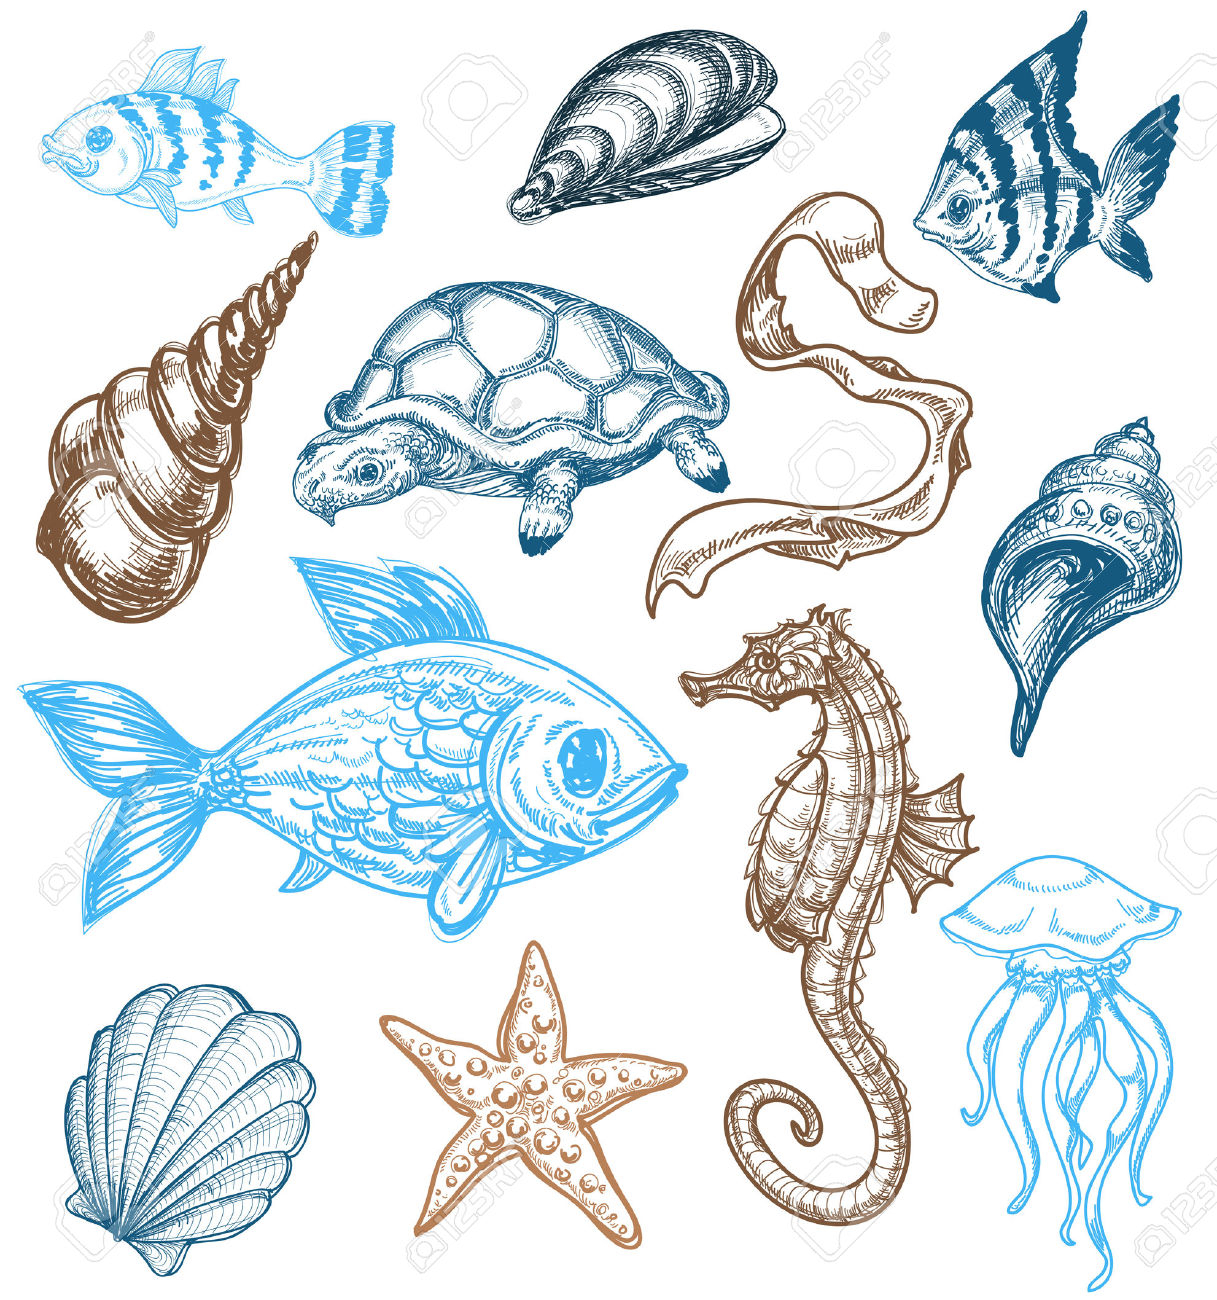 Sea Creatures Drawings Easy - Sea Drawing Creatures Easy Animals Animal ...